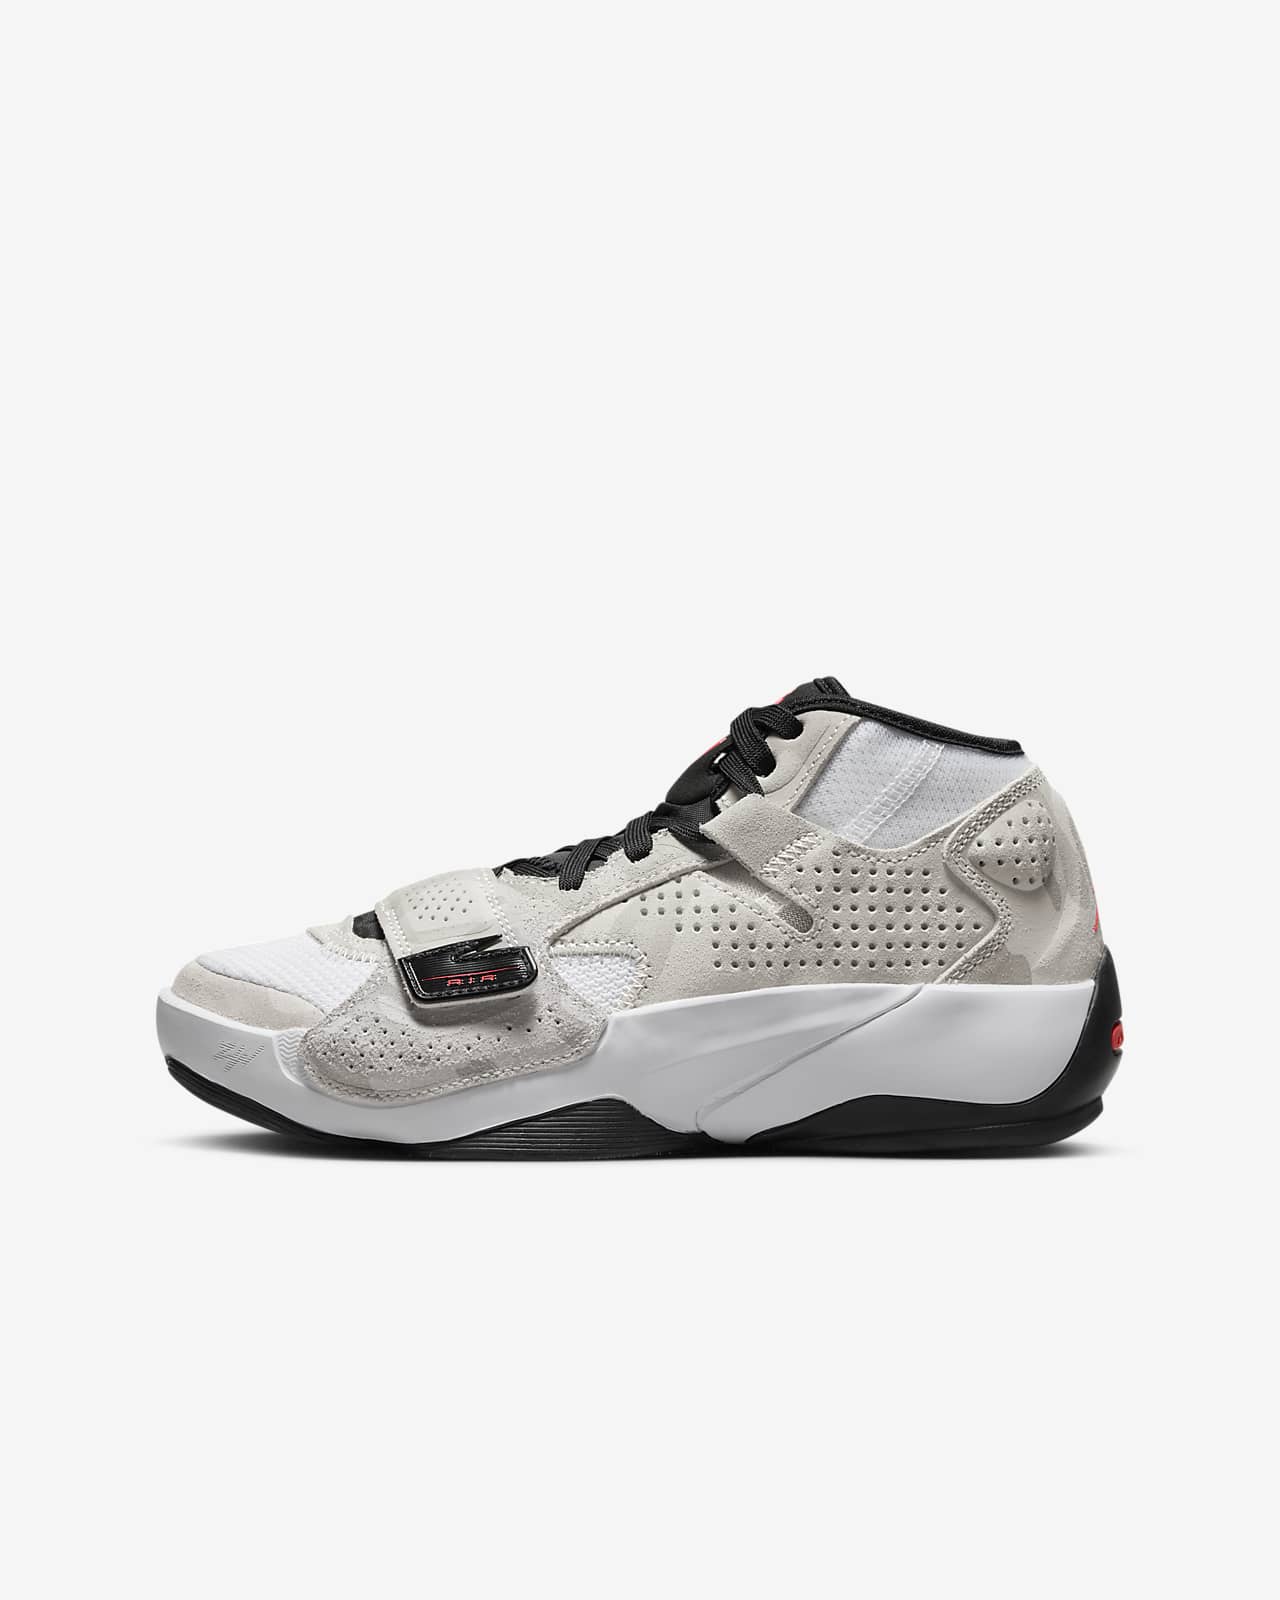 Excesivo Compatible con Varios Zion 2 Big Kids' Basketball Shoes. Nike.com